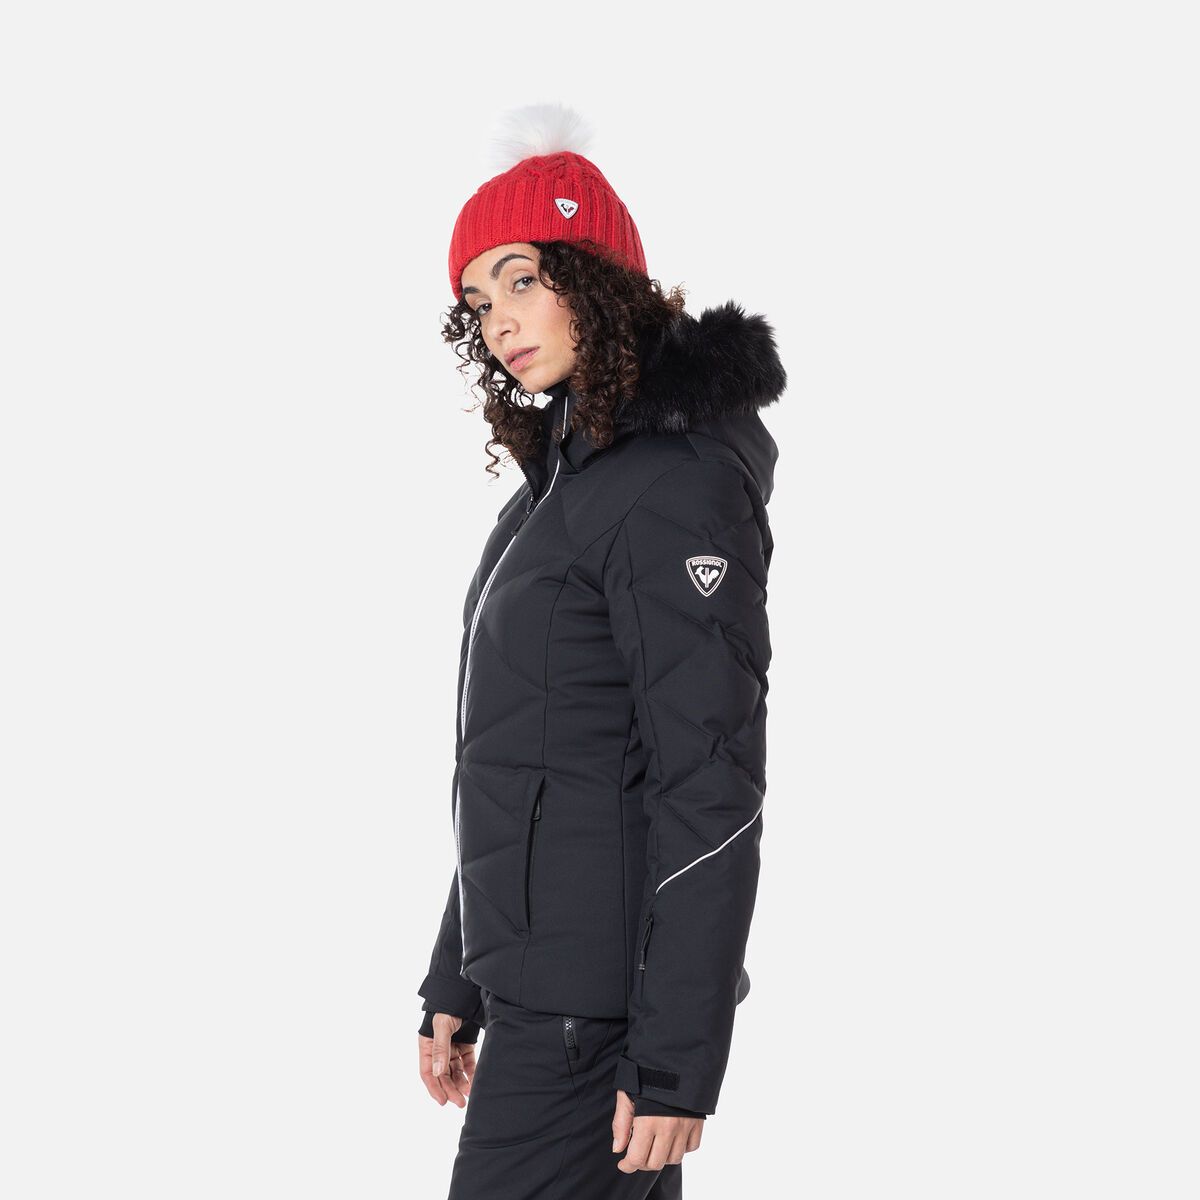 Rossignol Women's Staci Ski Jacket Black